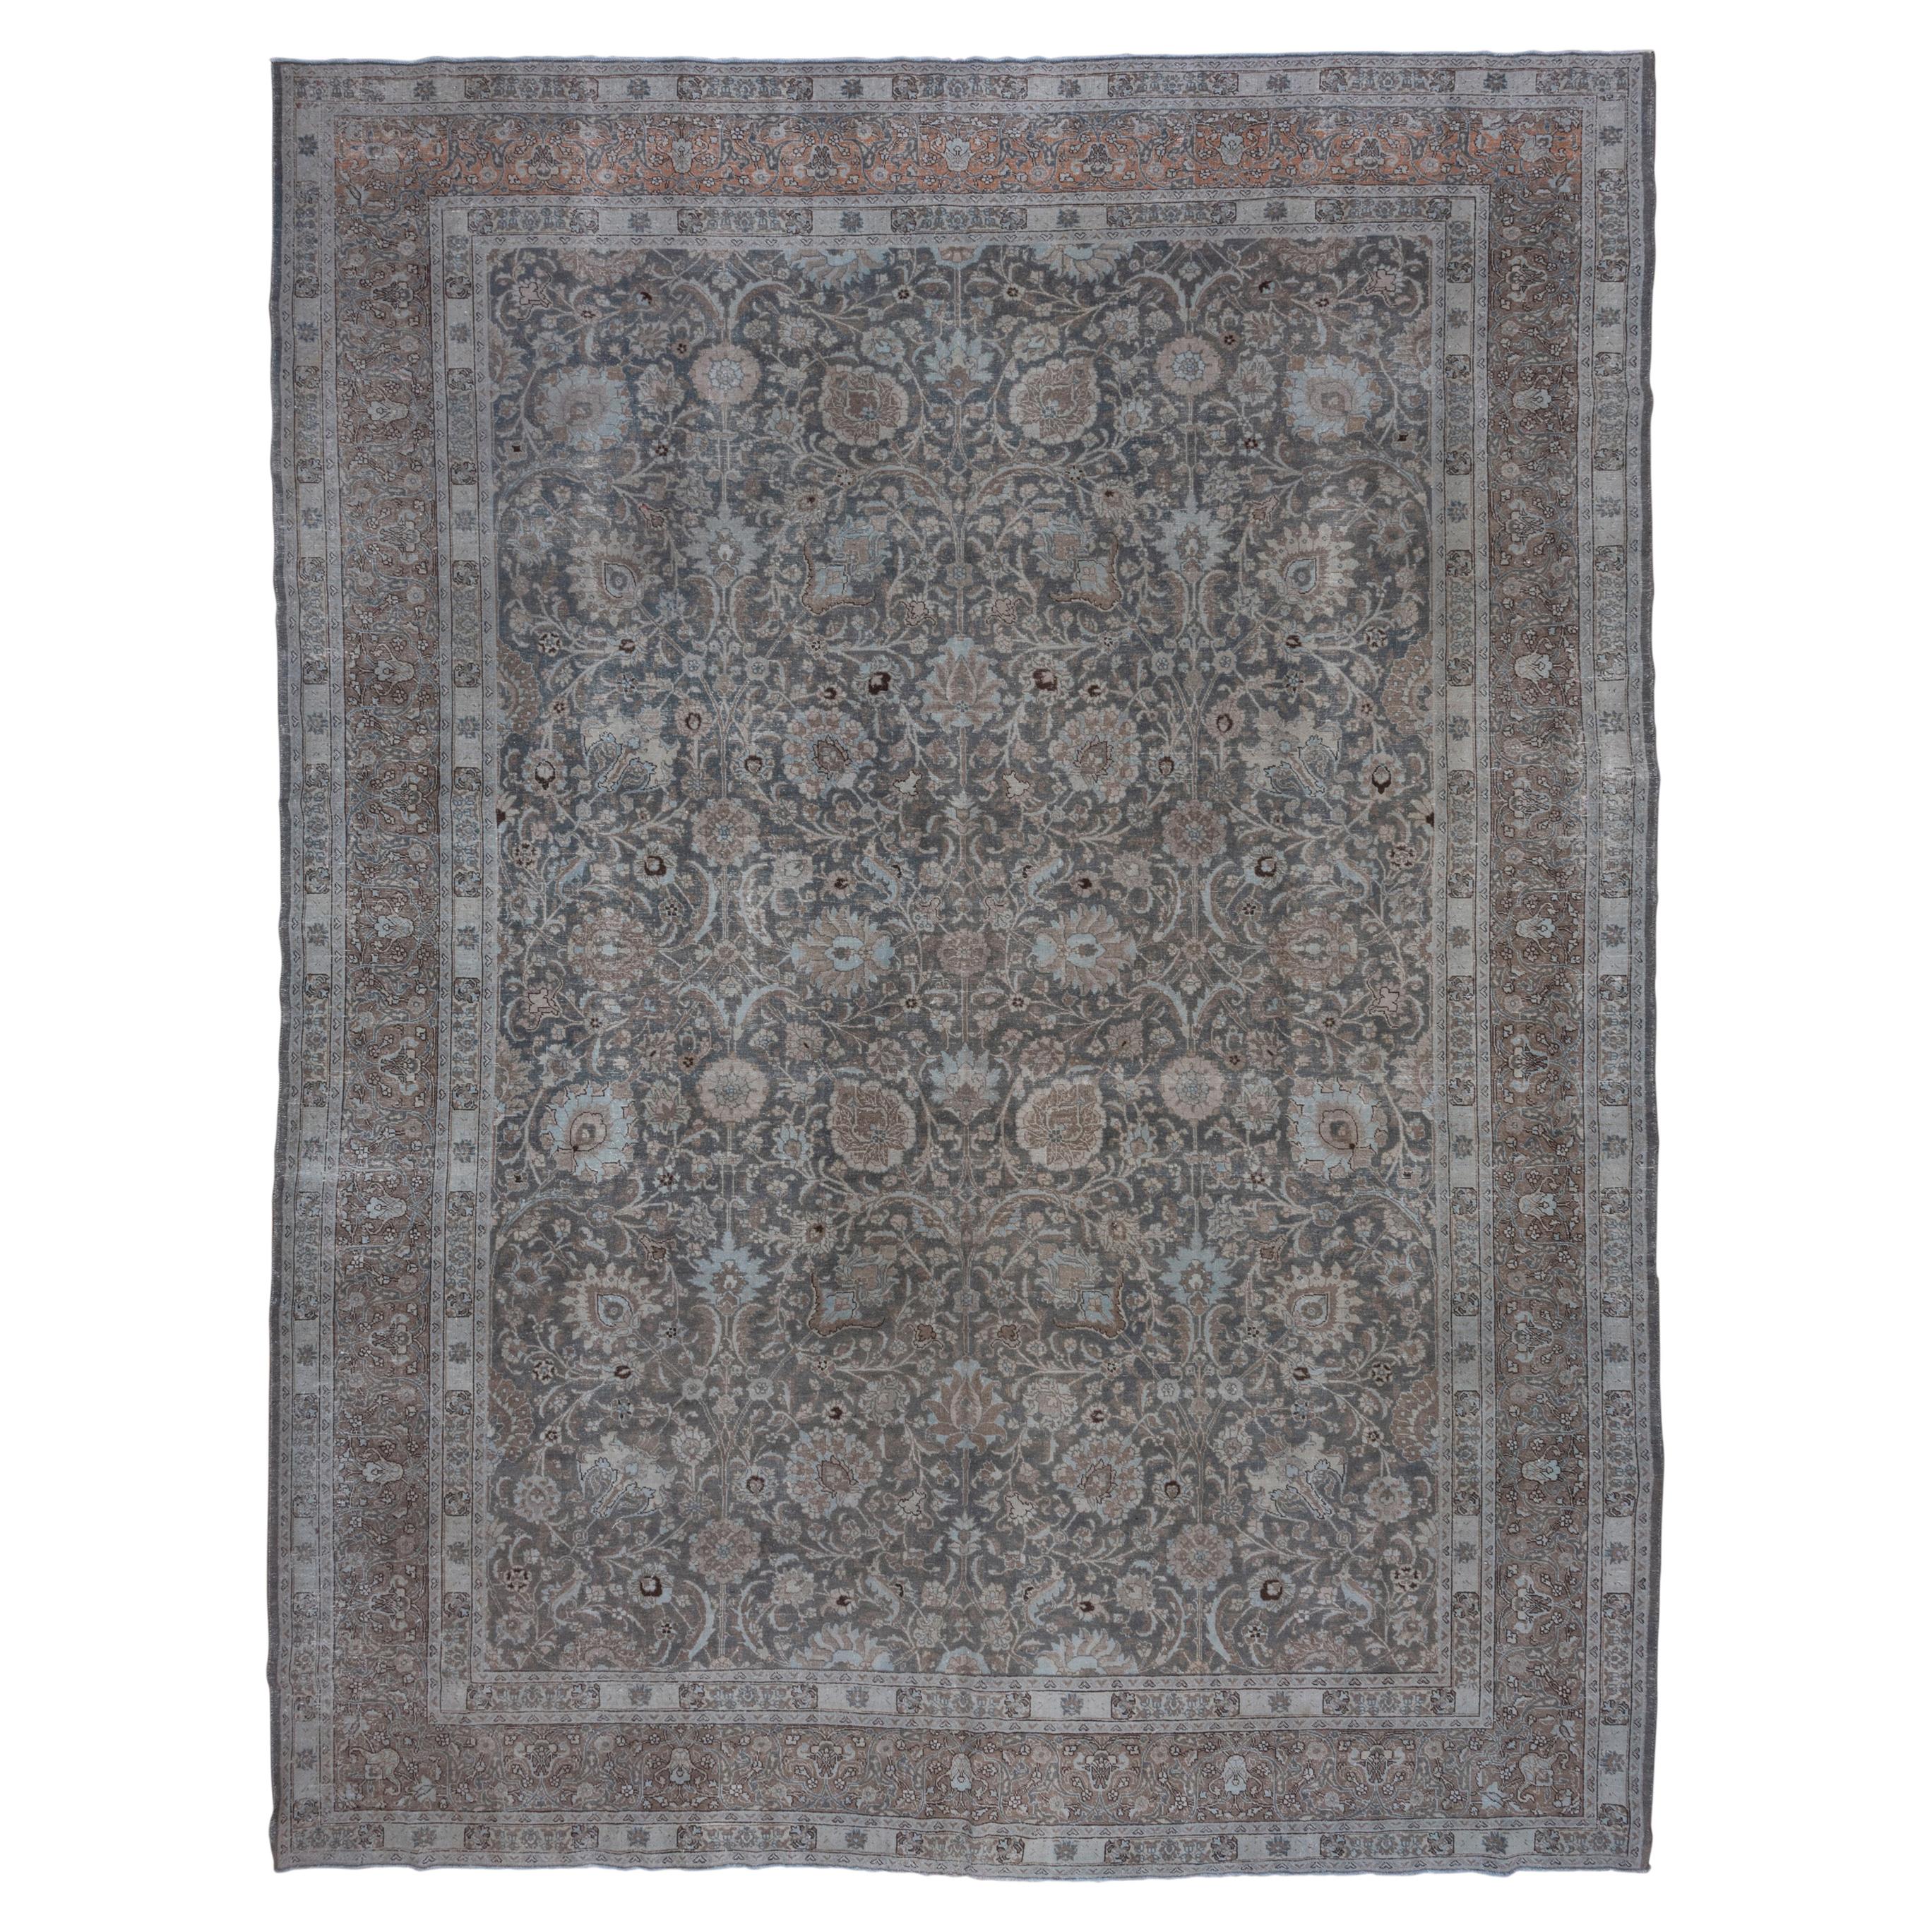 Antique Persian Tabriz Carpet, circa 1920s